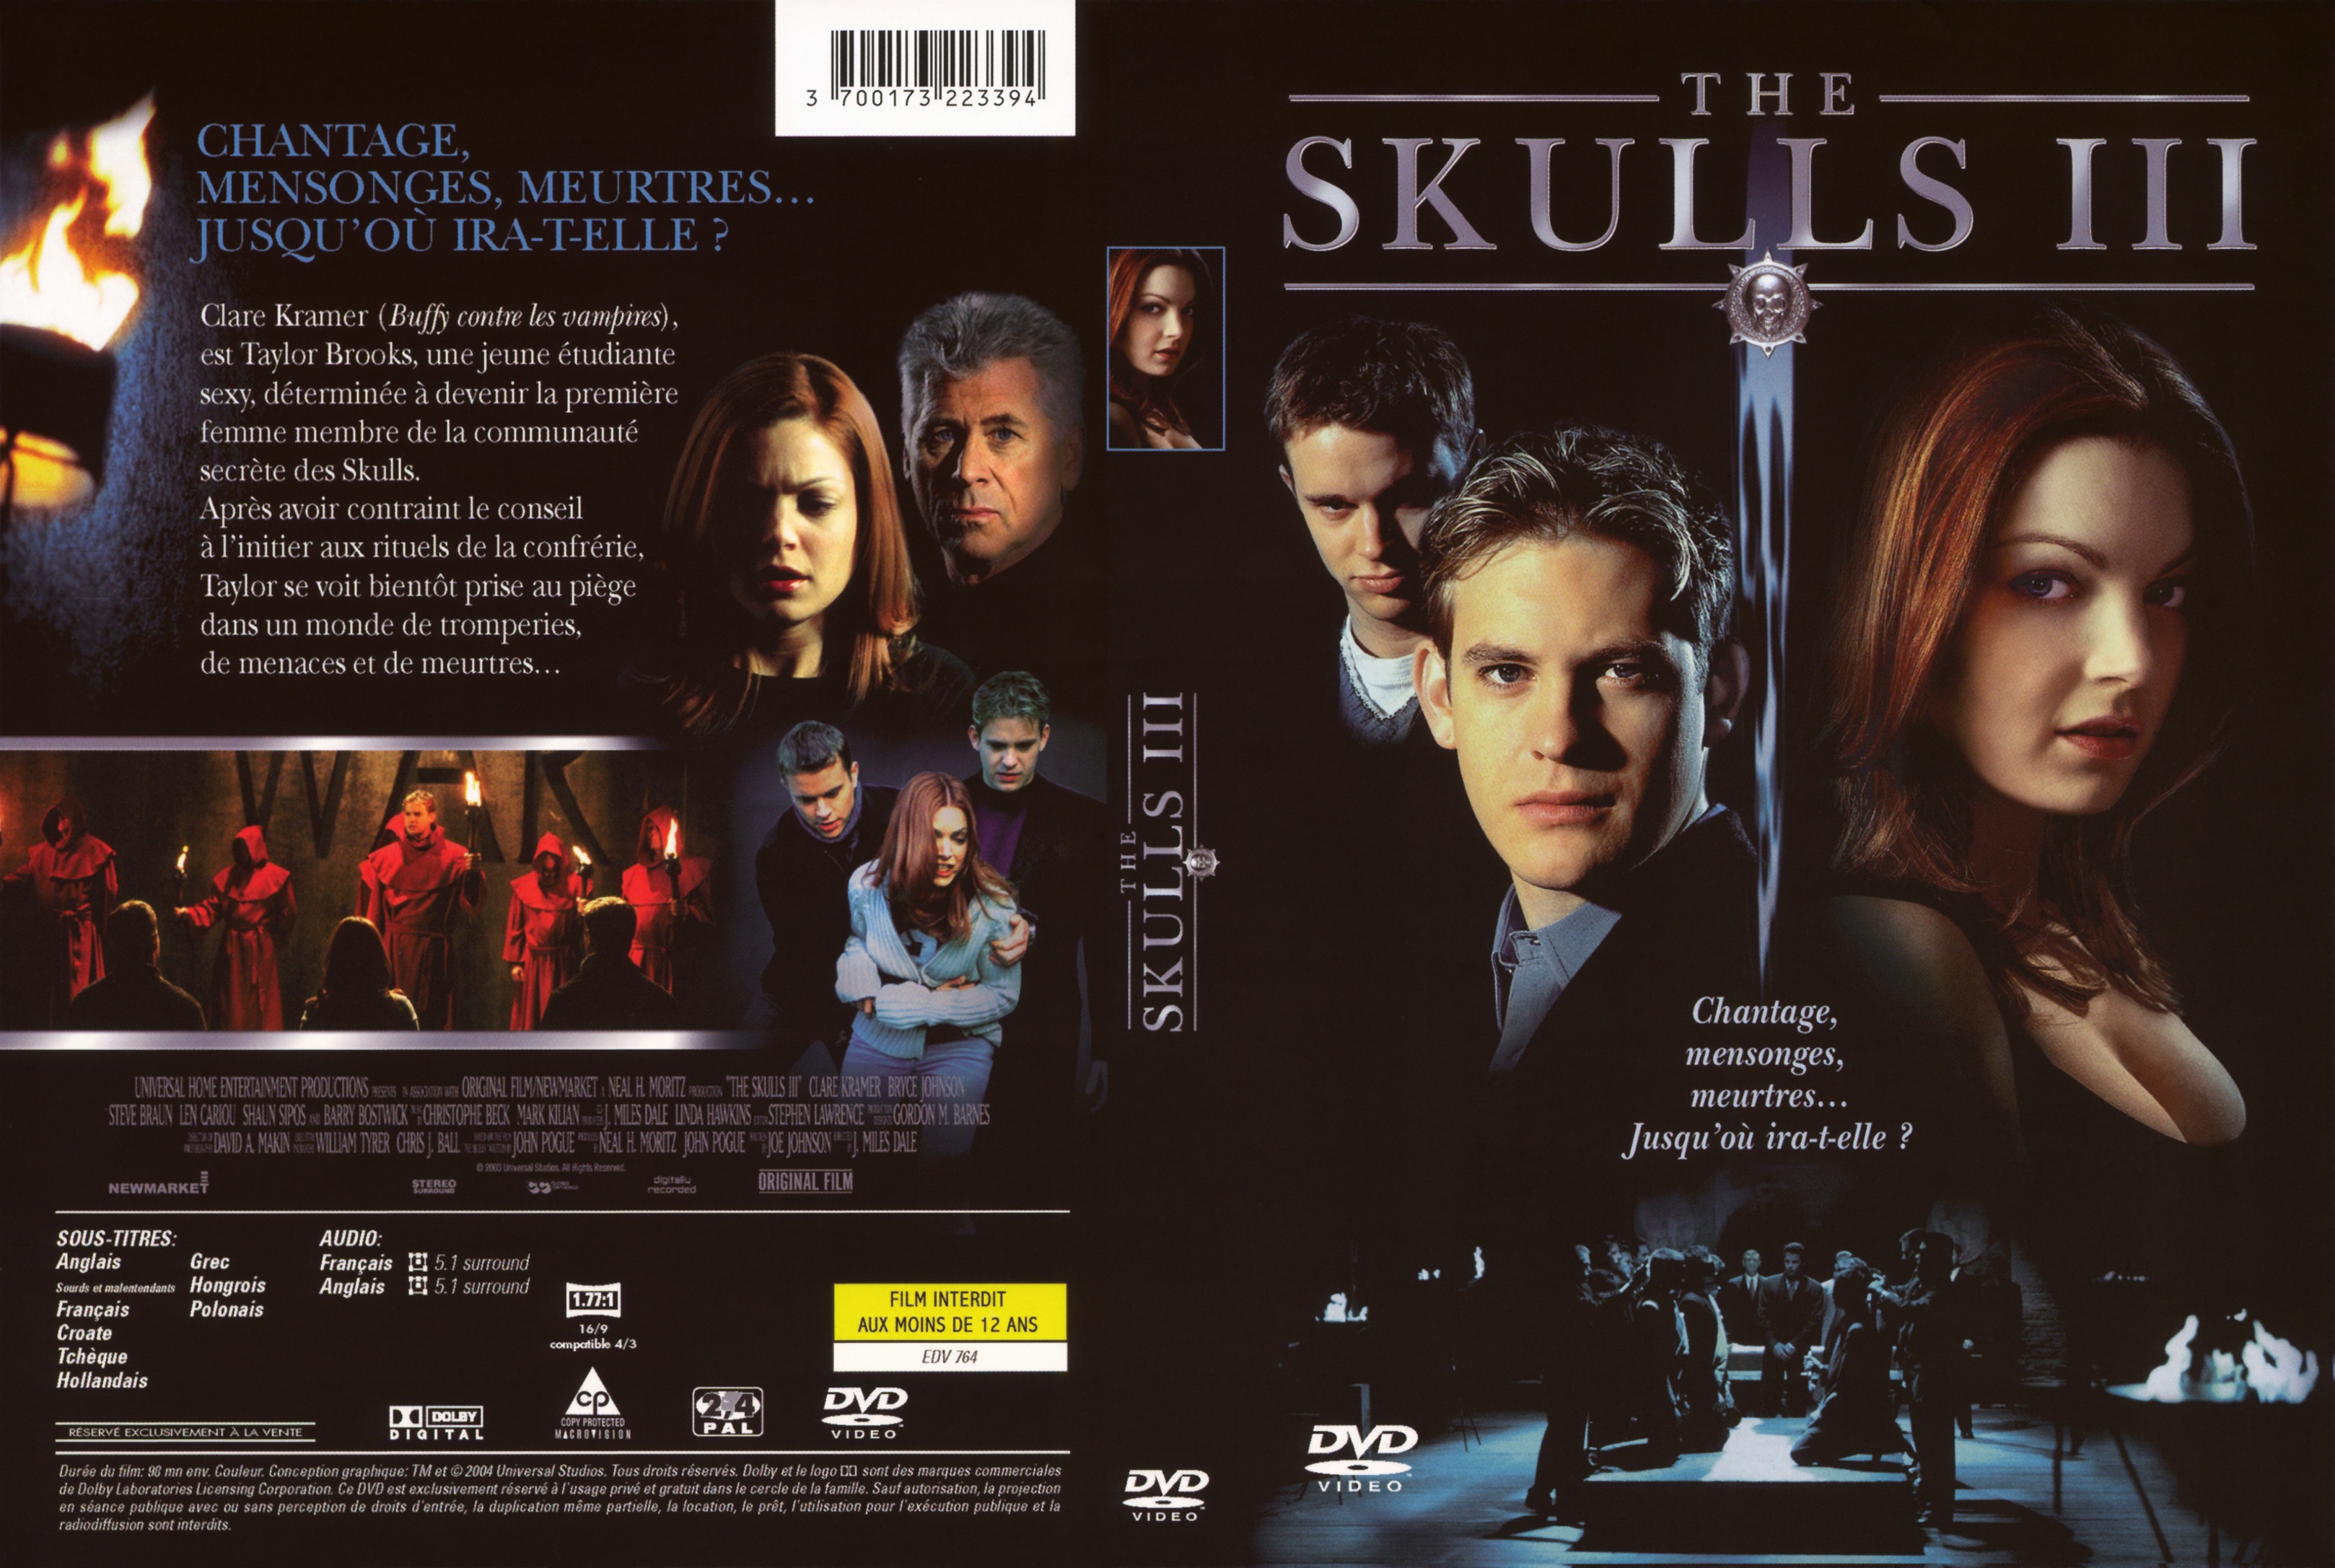 Jaquette DVD The skulls 3